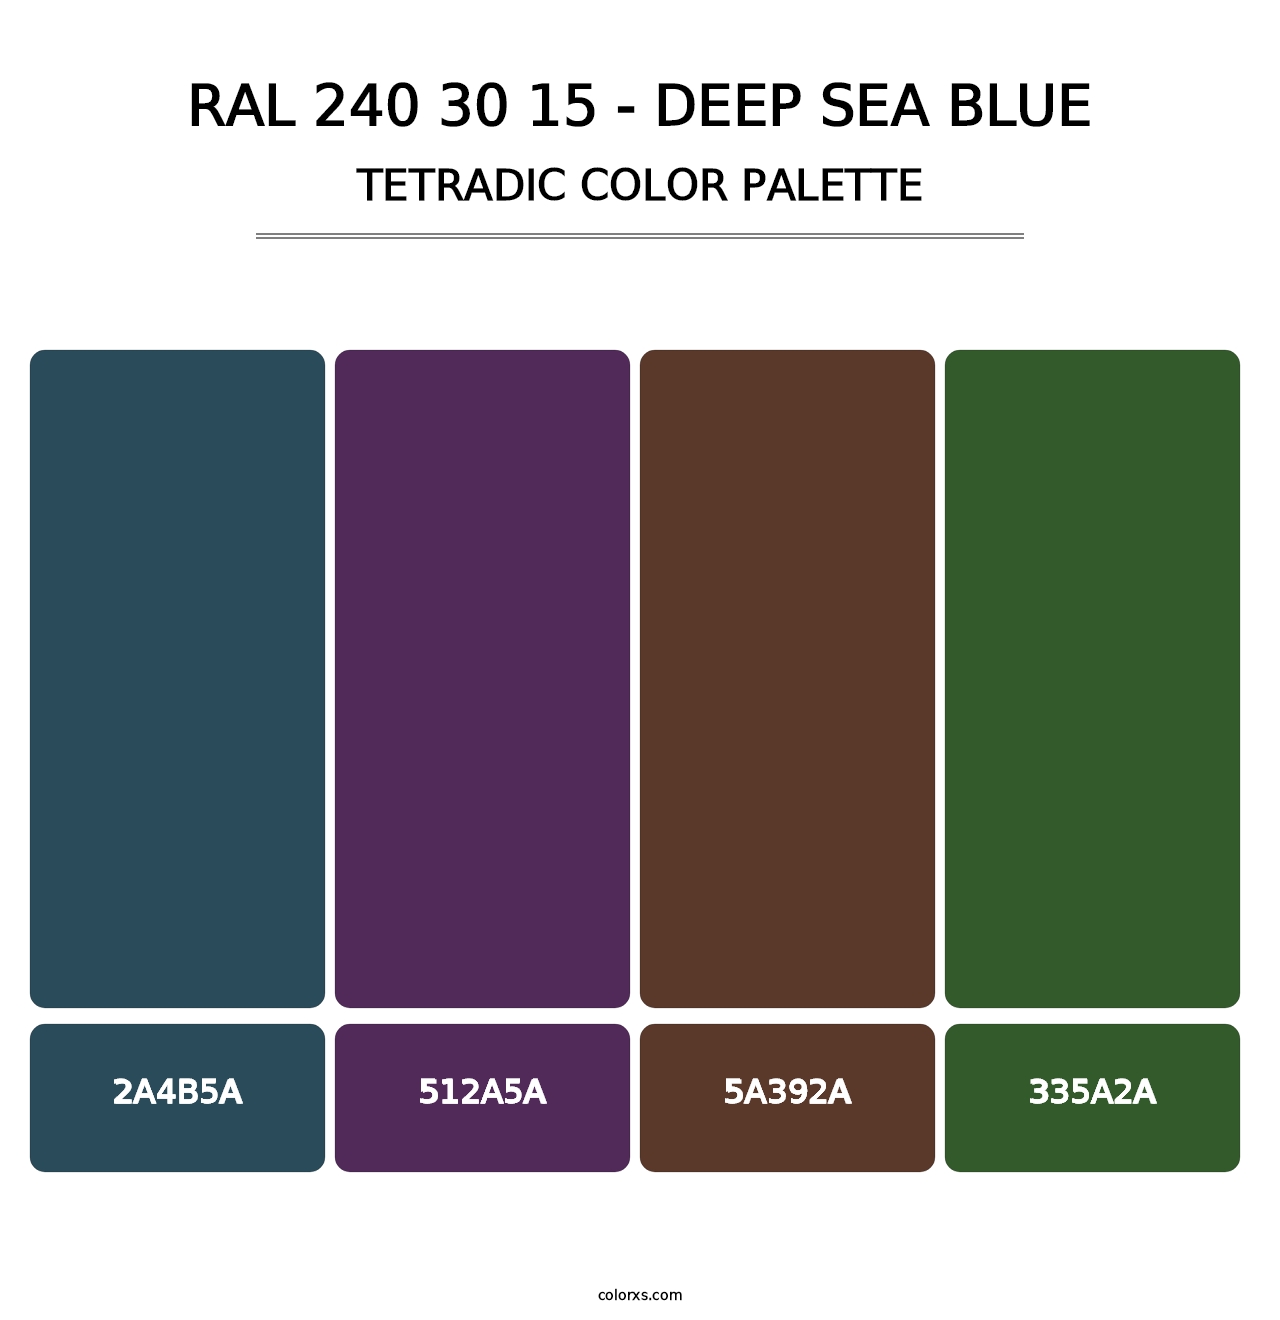 RAL 240 30 15 - Deep Sea Blue - Tetradic Color Palette